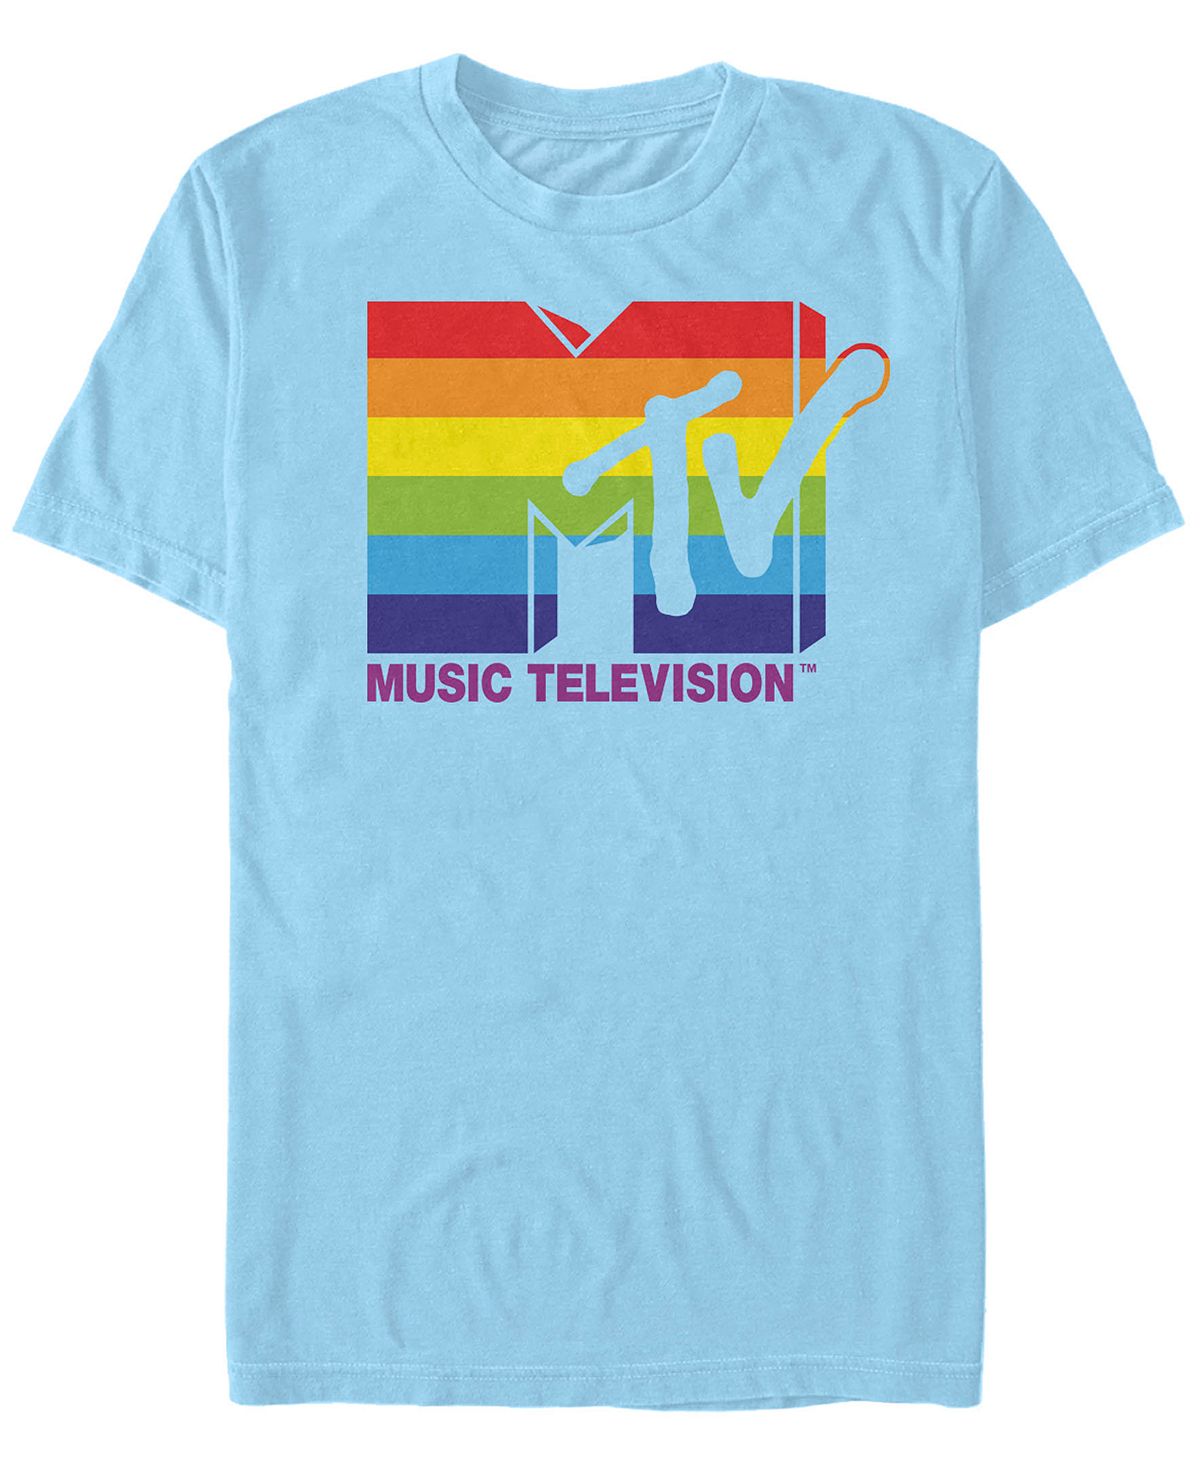 Мужская футболка с коротким рукавом с логотипом rainbow pride Fifth Sun, голубой